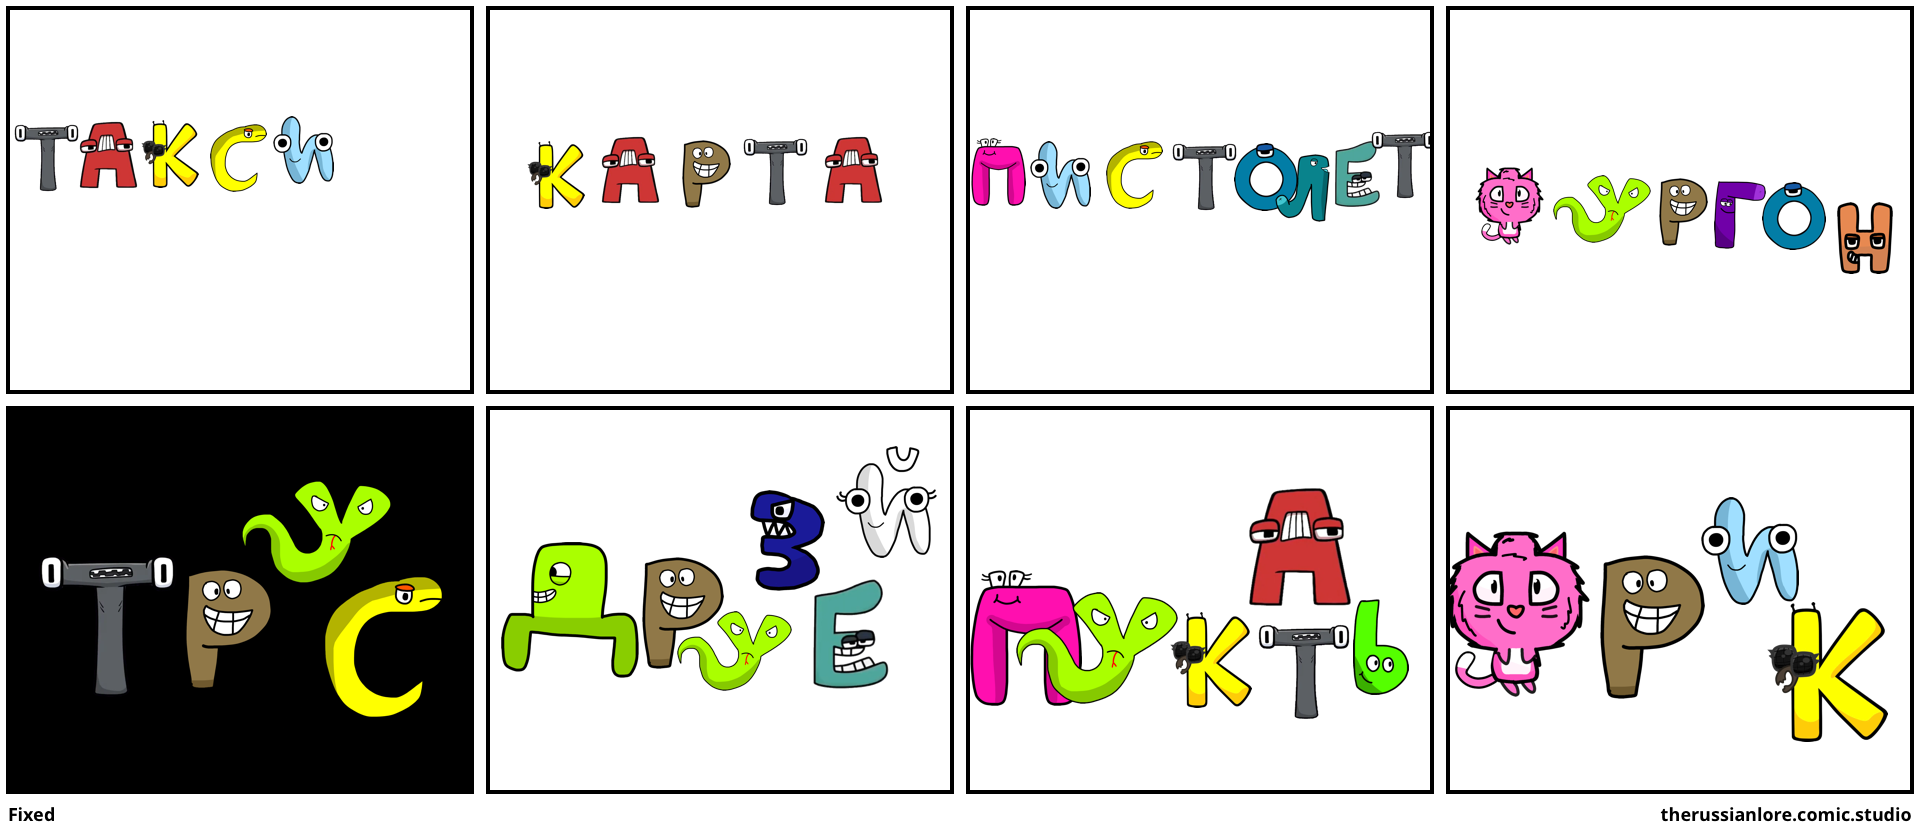 Some Russian Alphabet Lore Baby's - Comic Studio